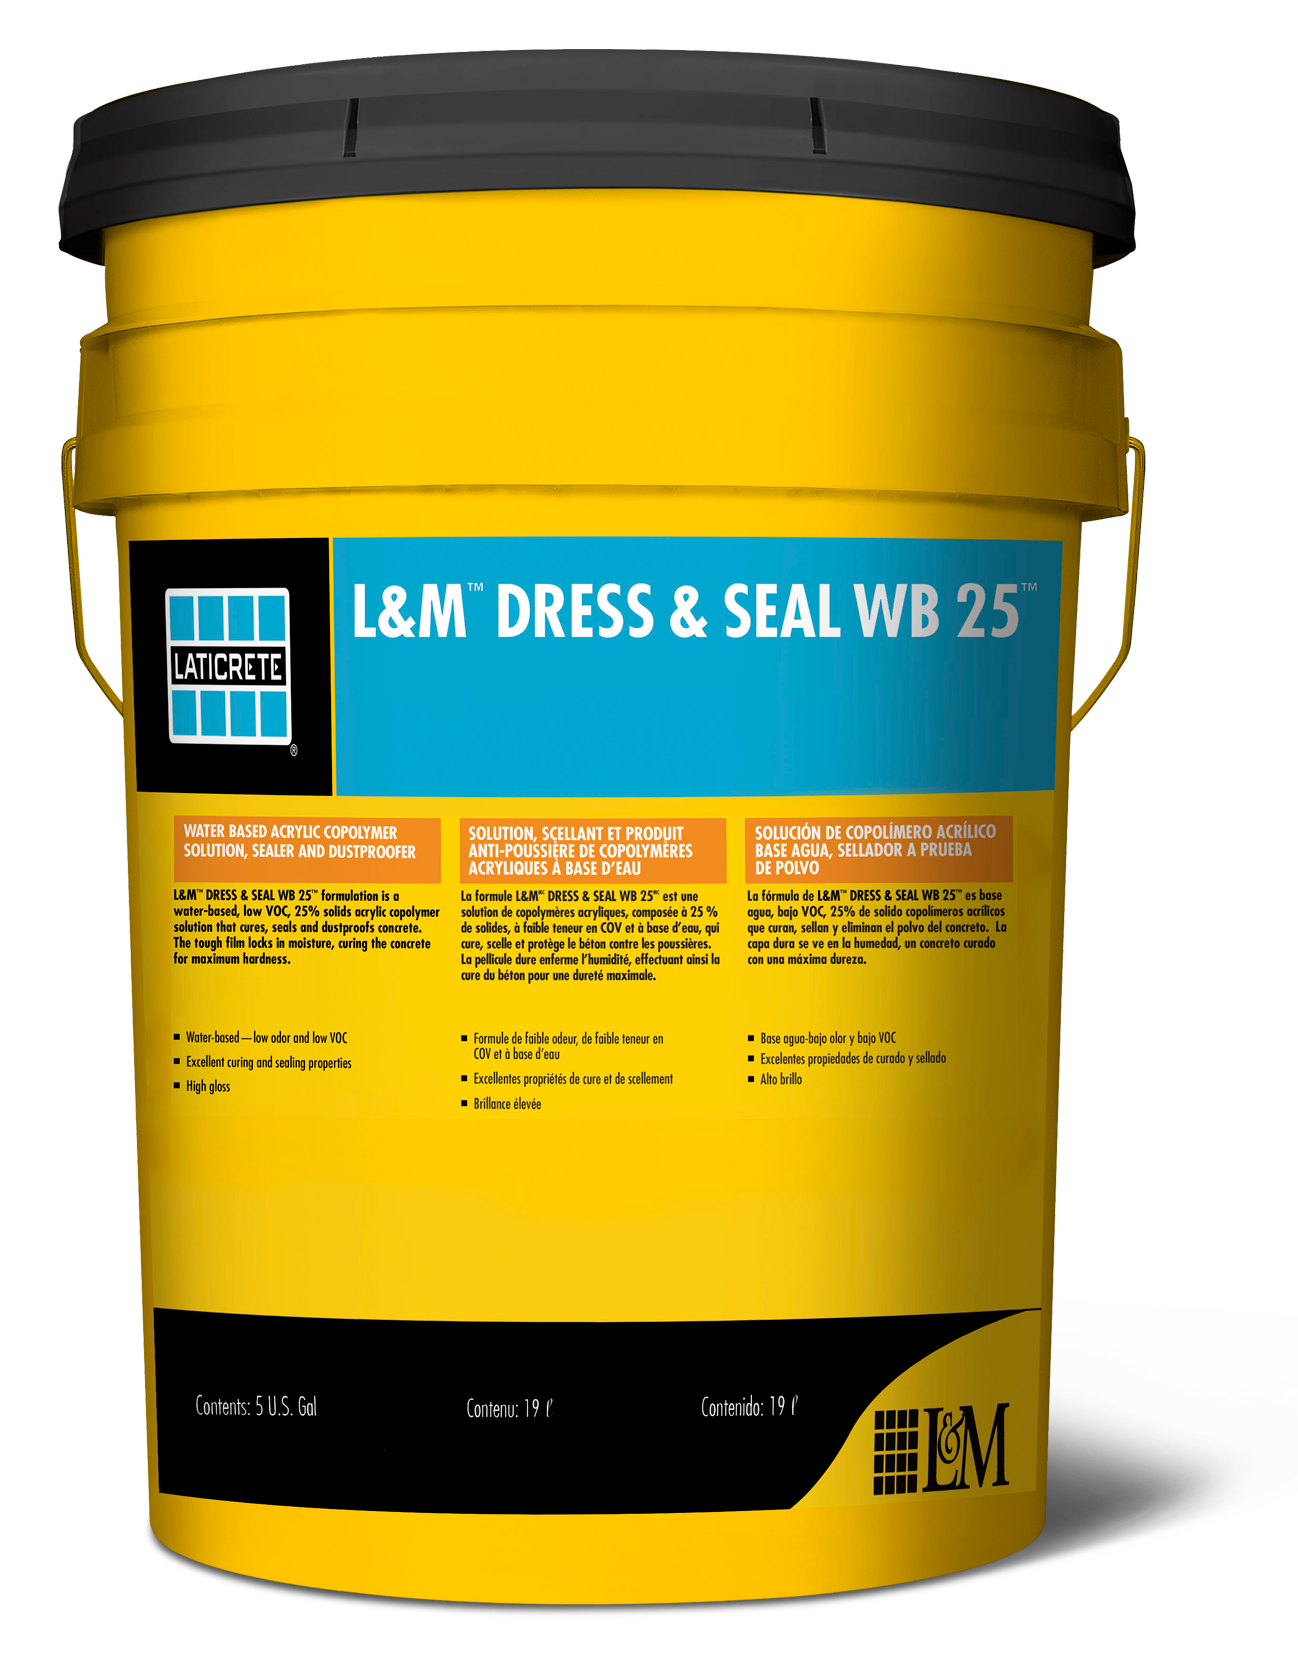 Dress & Seal WB 25